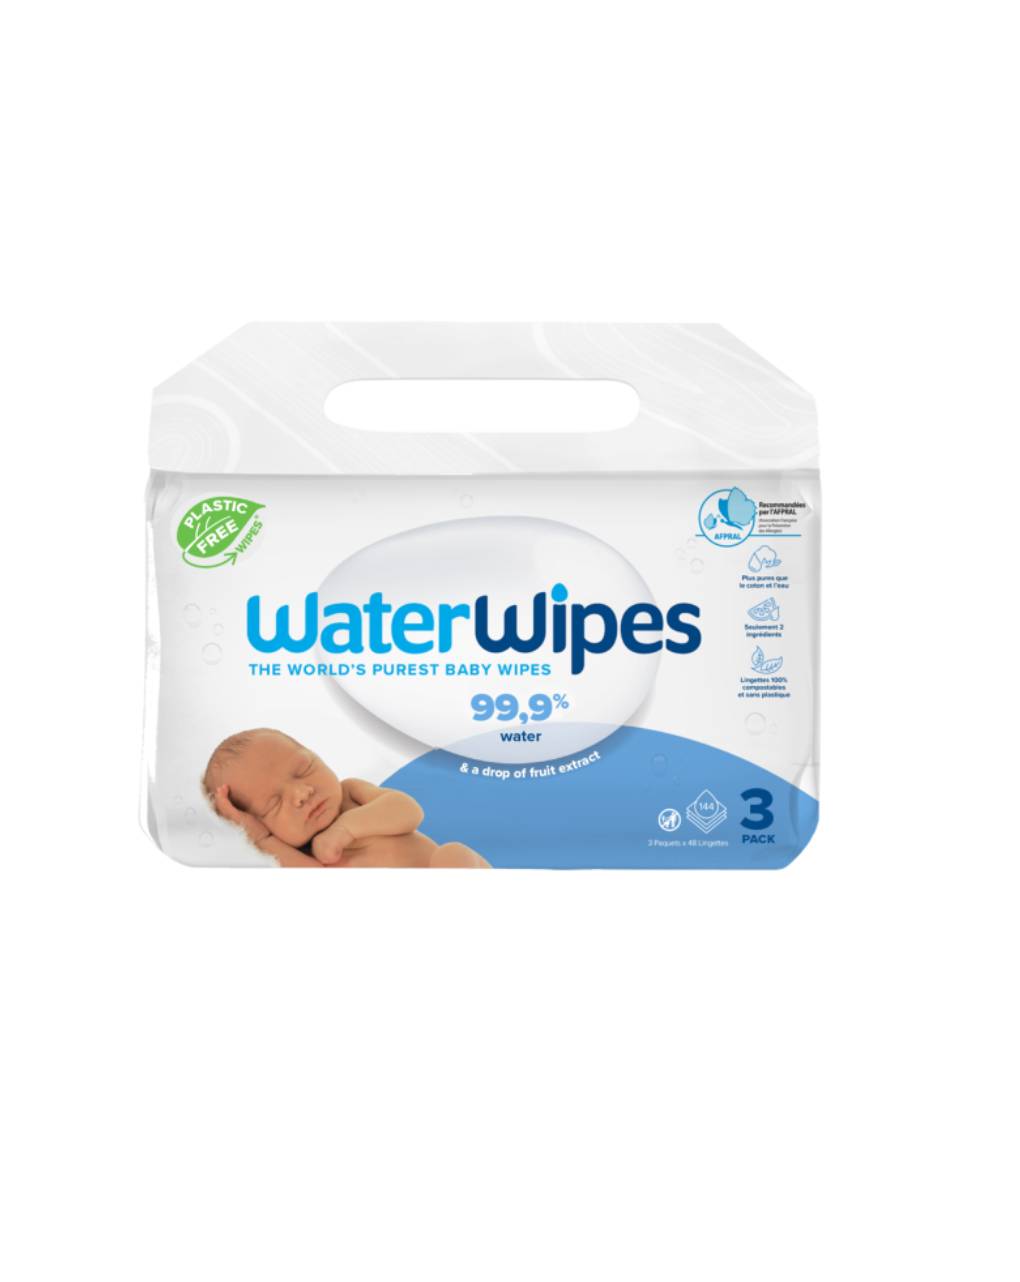 Waterwipes, 100% plastic-free άοσμα μωρομάντηλα, 99.9% νερό, πακέτο προσφοράς bio μαντηλάκια 3x48 ib/420118 - WaterWipes